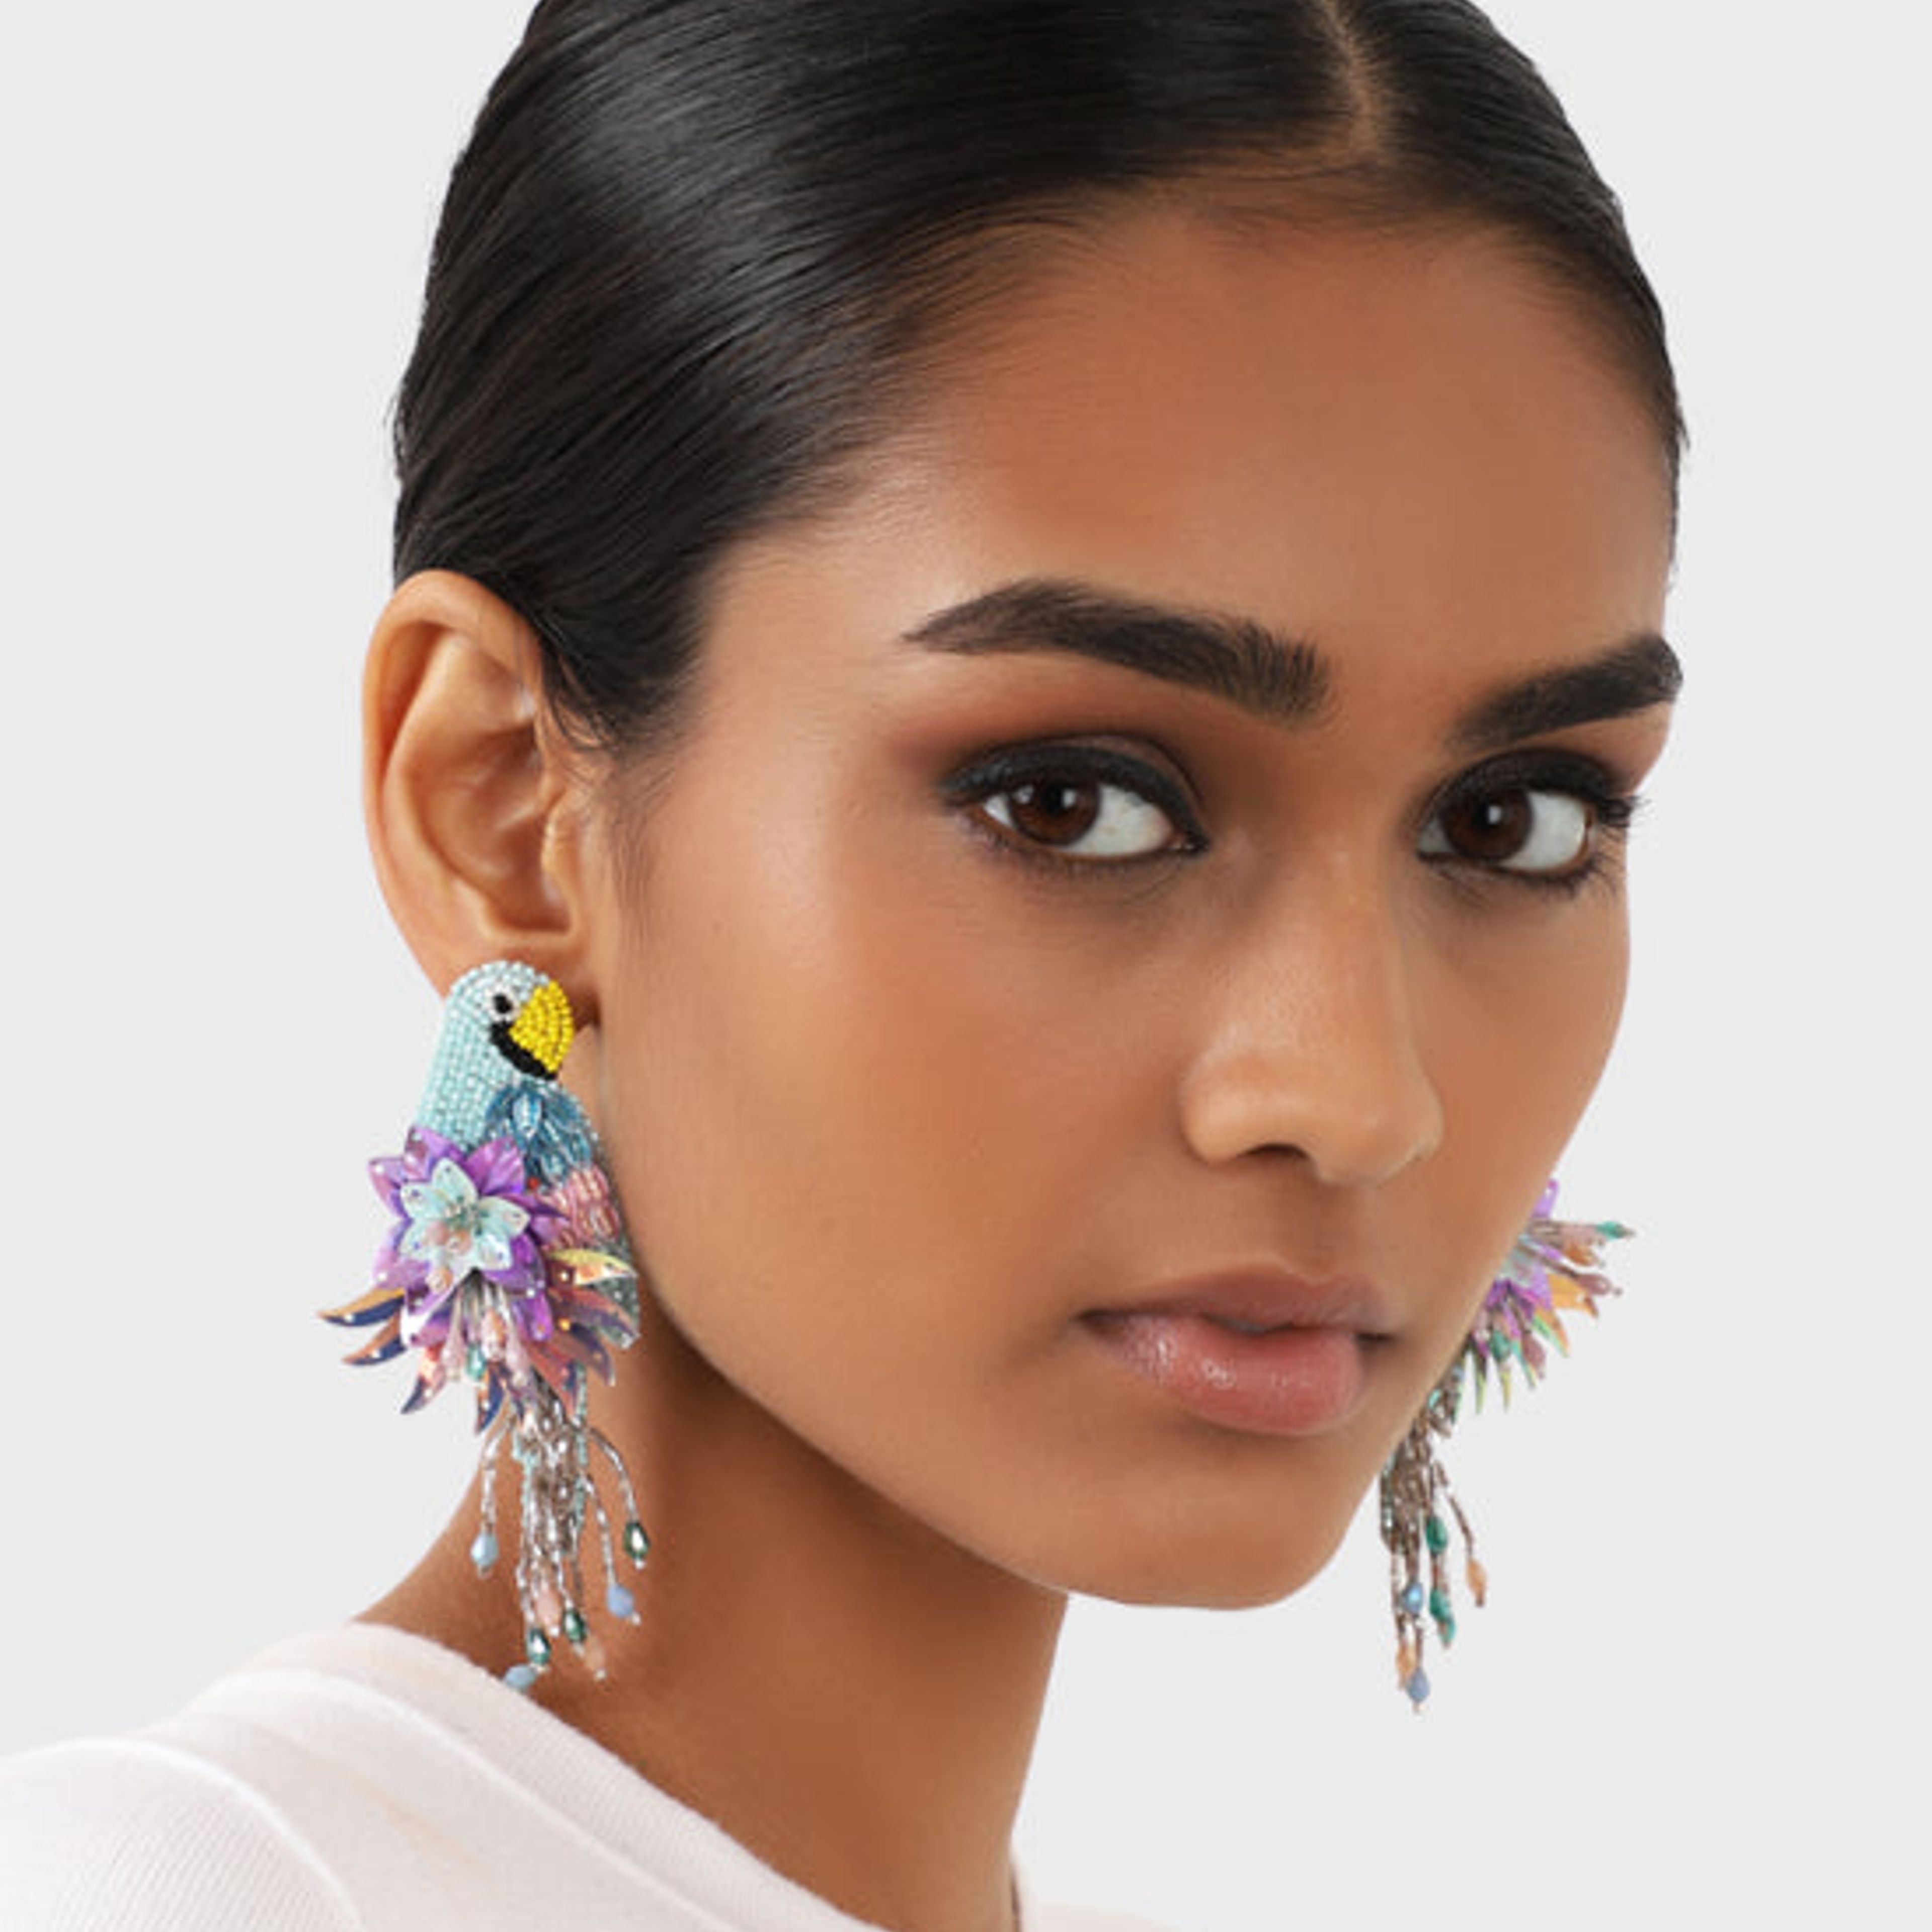 Parrot Earrings Lilac